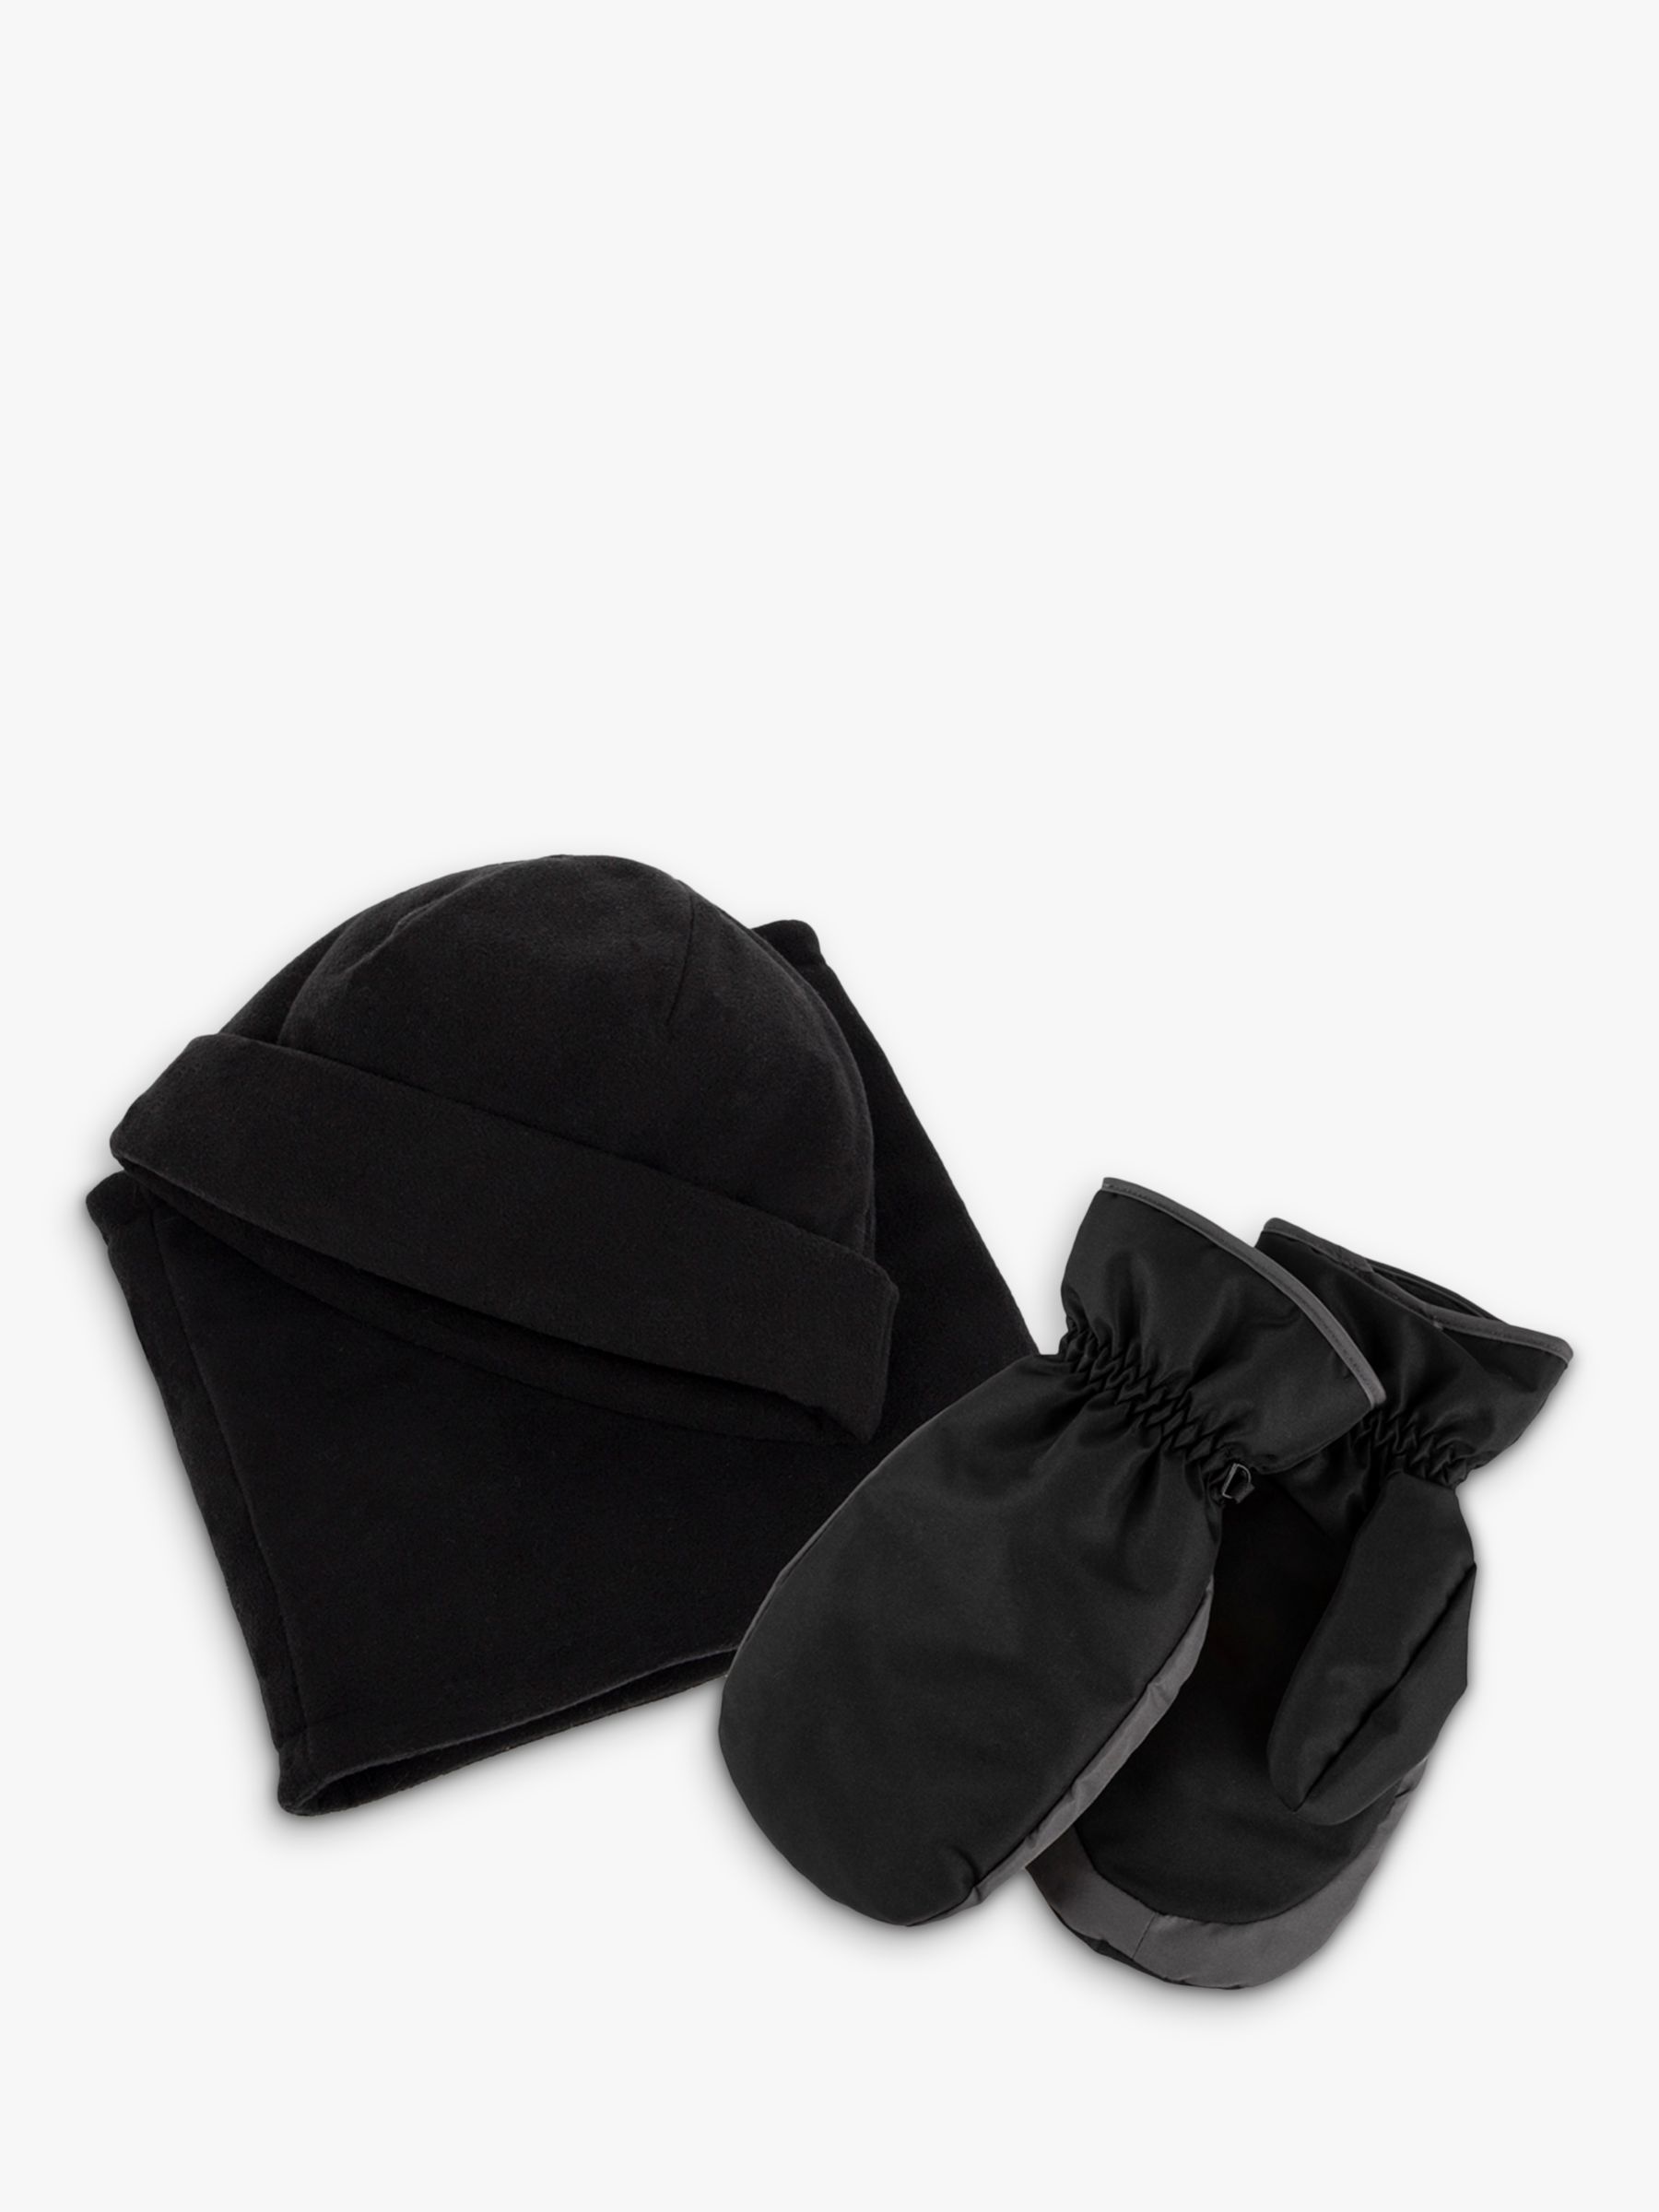 Buy totes Golf Thermal Hat, Gloves And Snood Set, Black Online at johnlewis.com